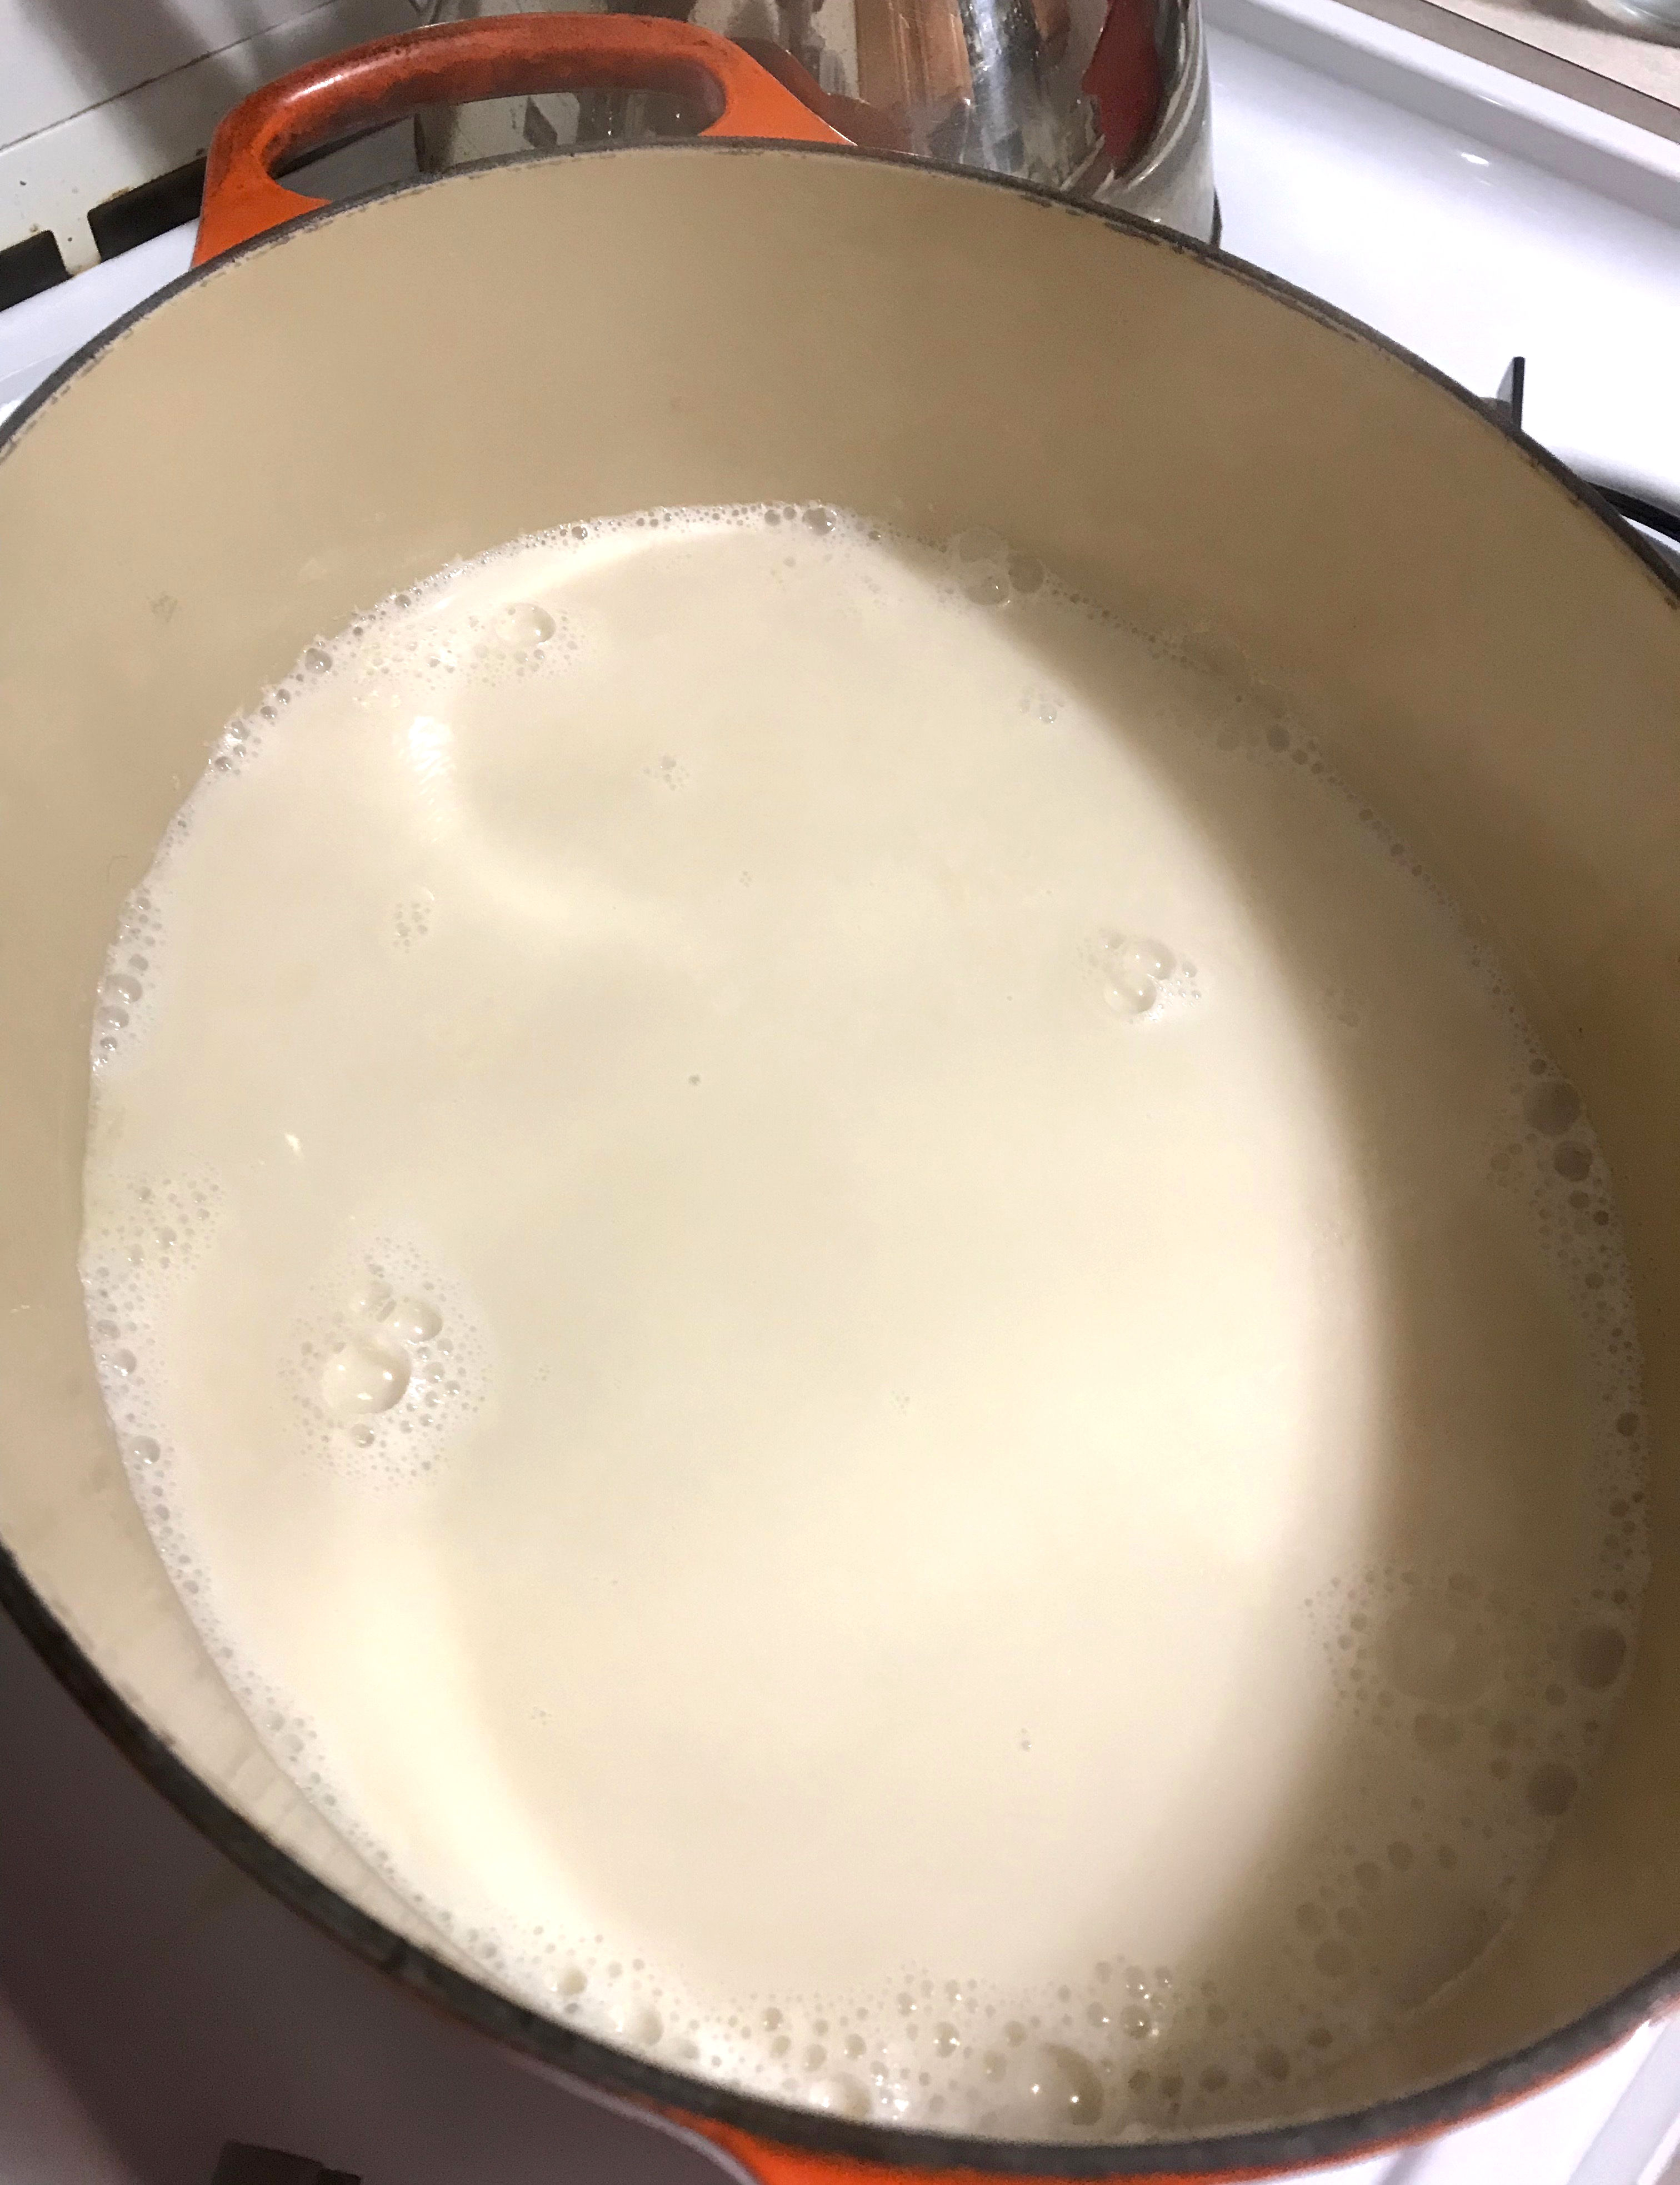 heating soy milk to make tofu